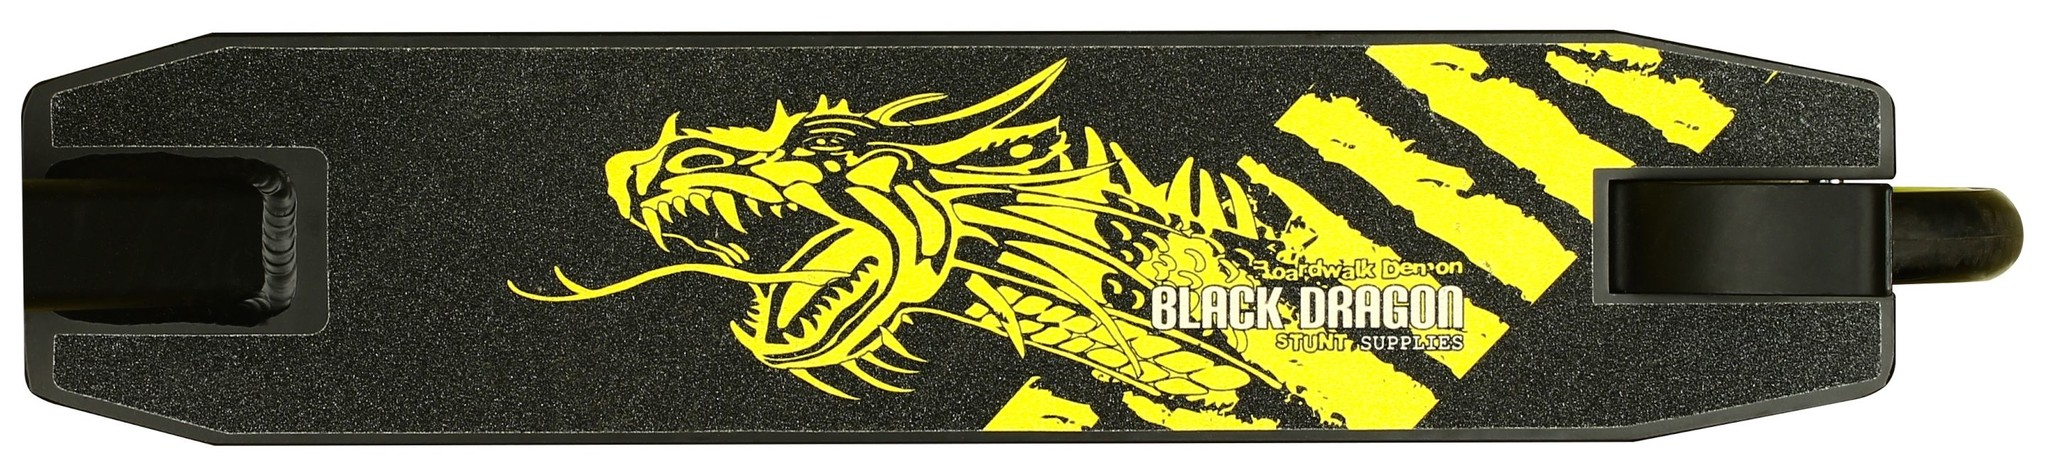 Black Dragon® Stunt Scooter Road Rage - ZWL